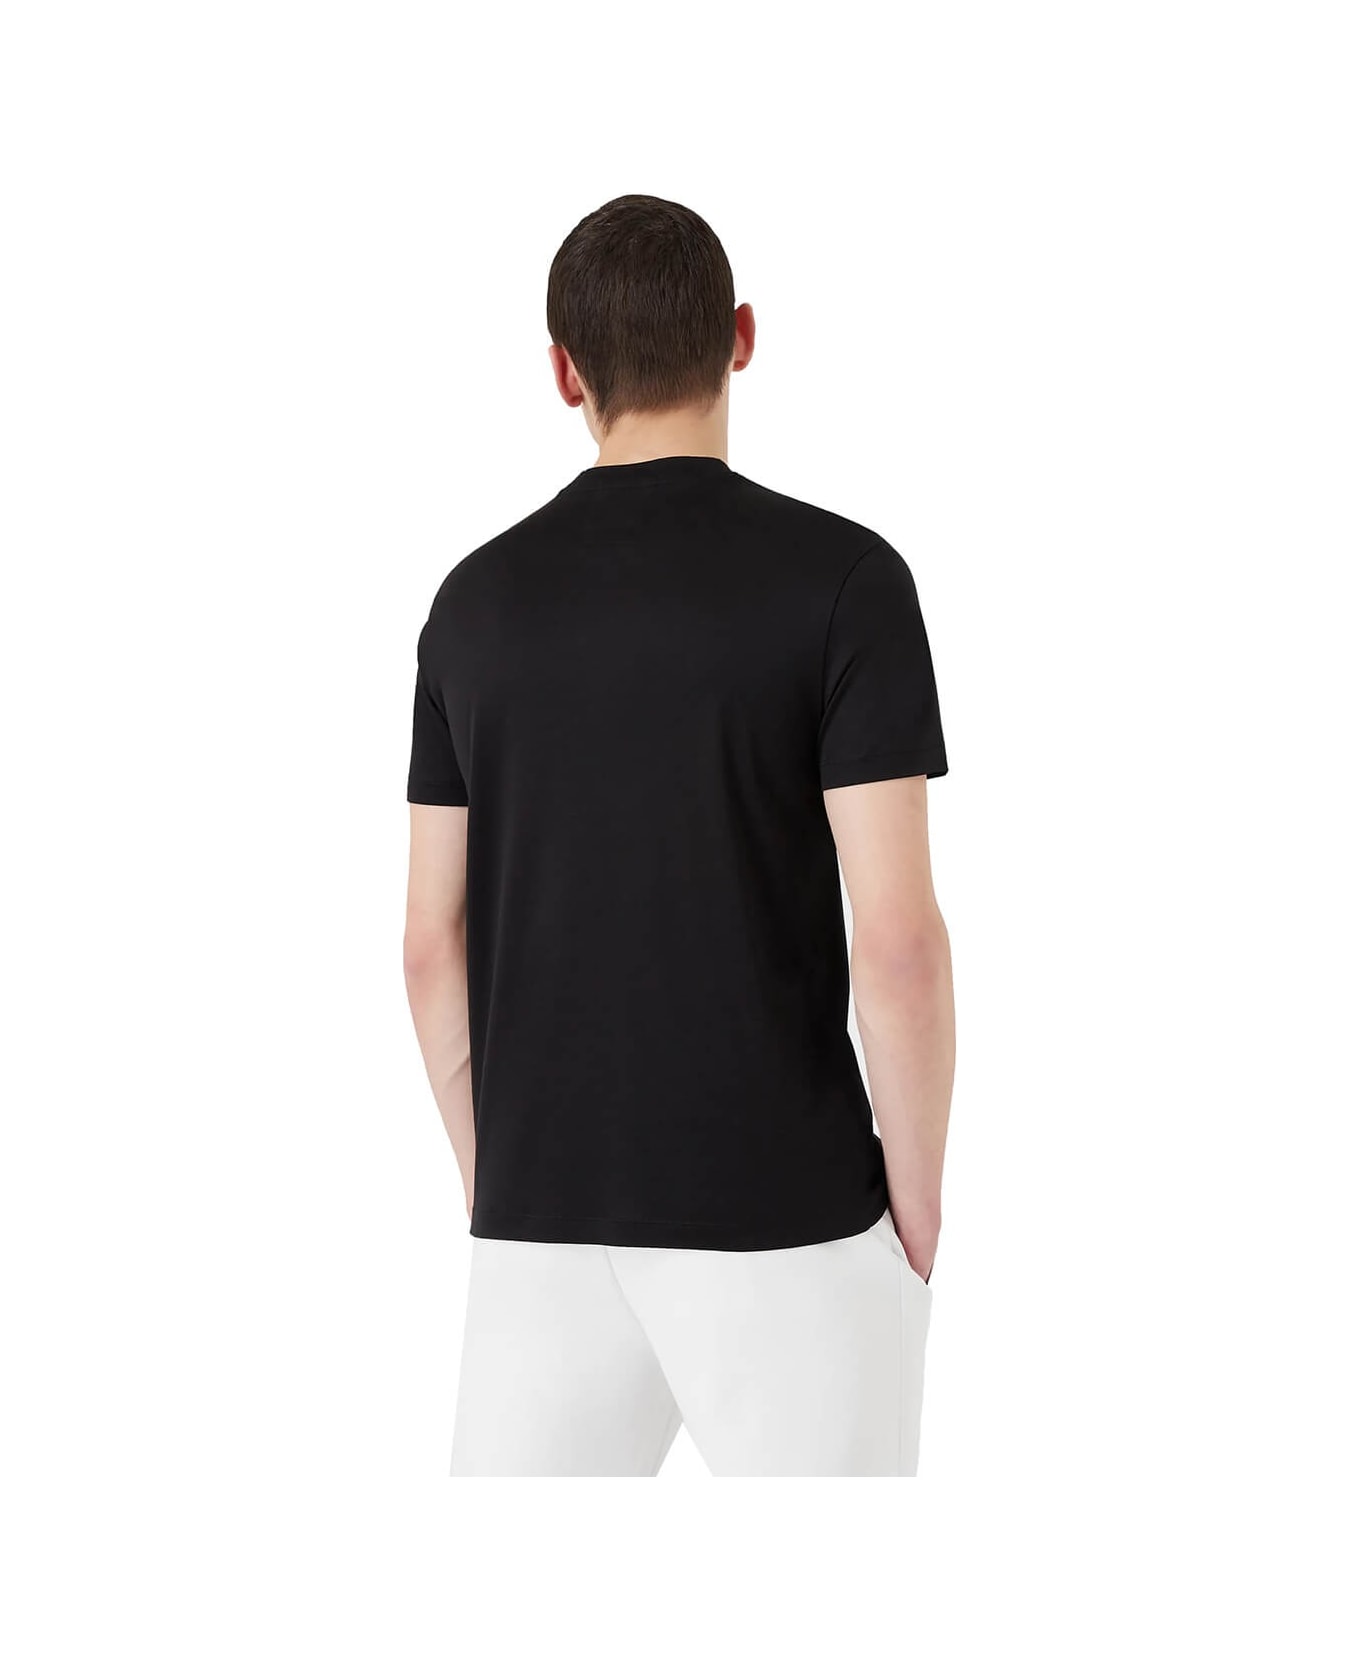 Emporio Armani Essential Black T-shirt - Black